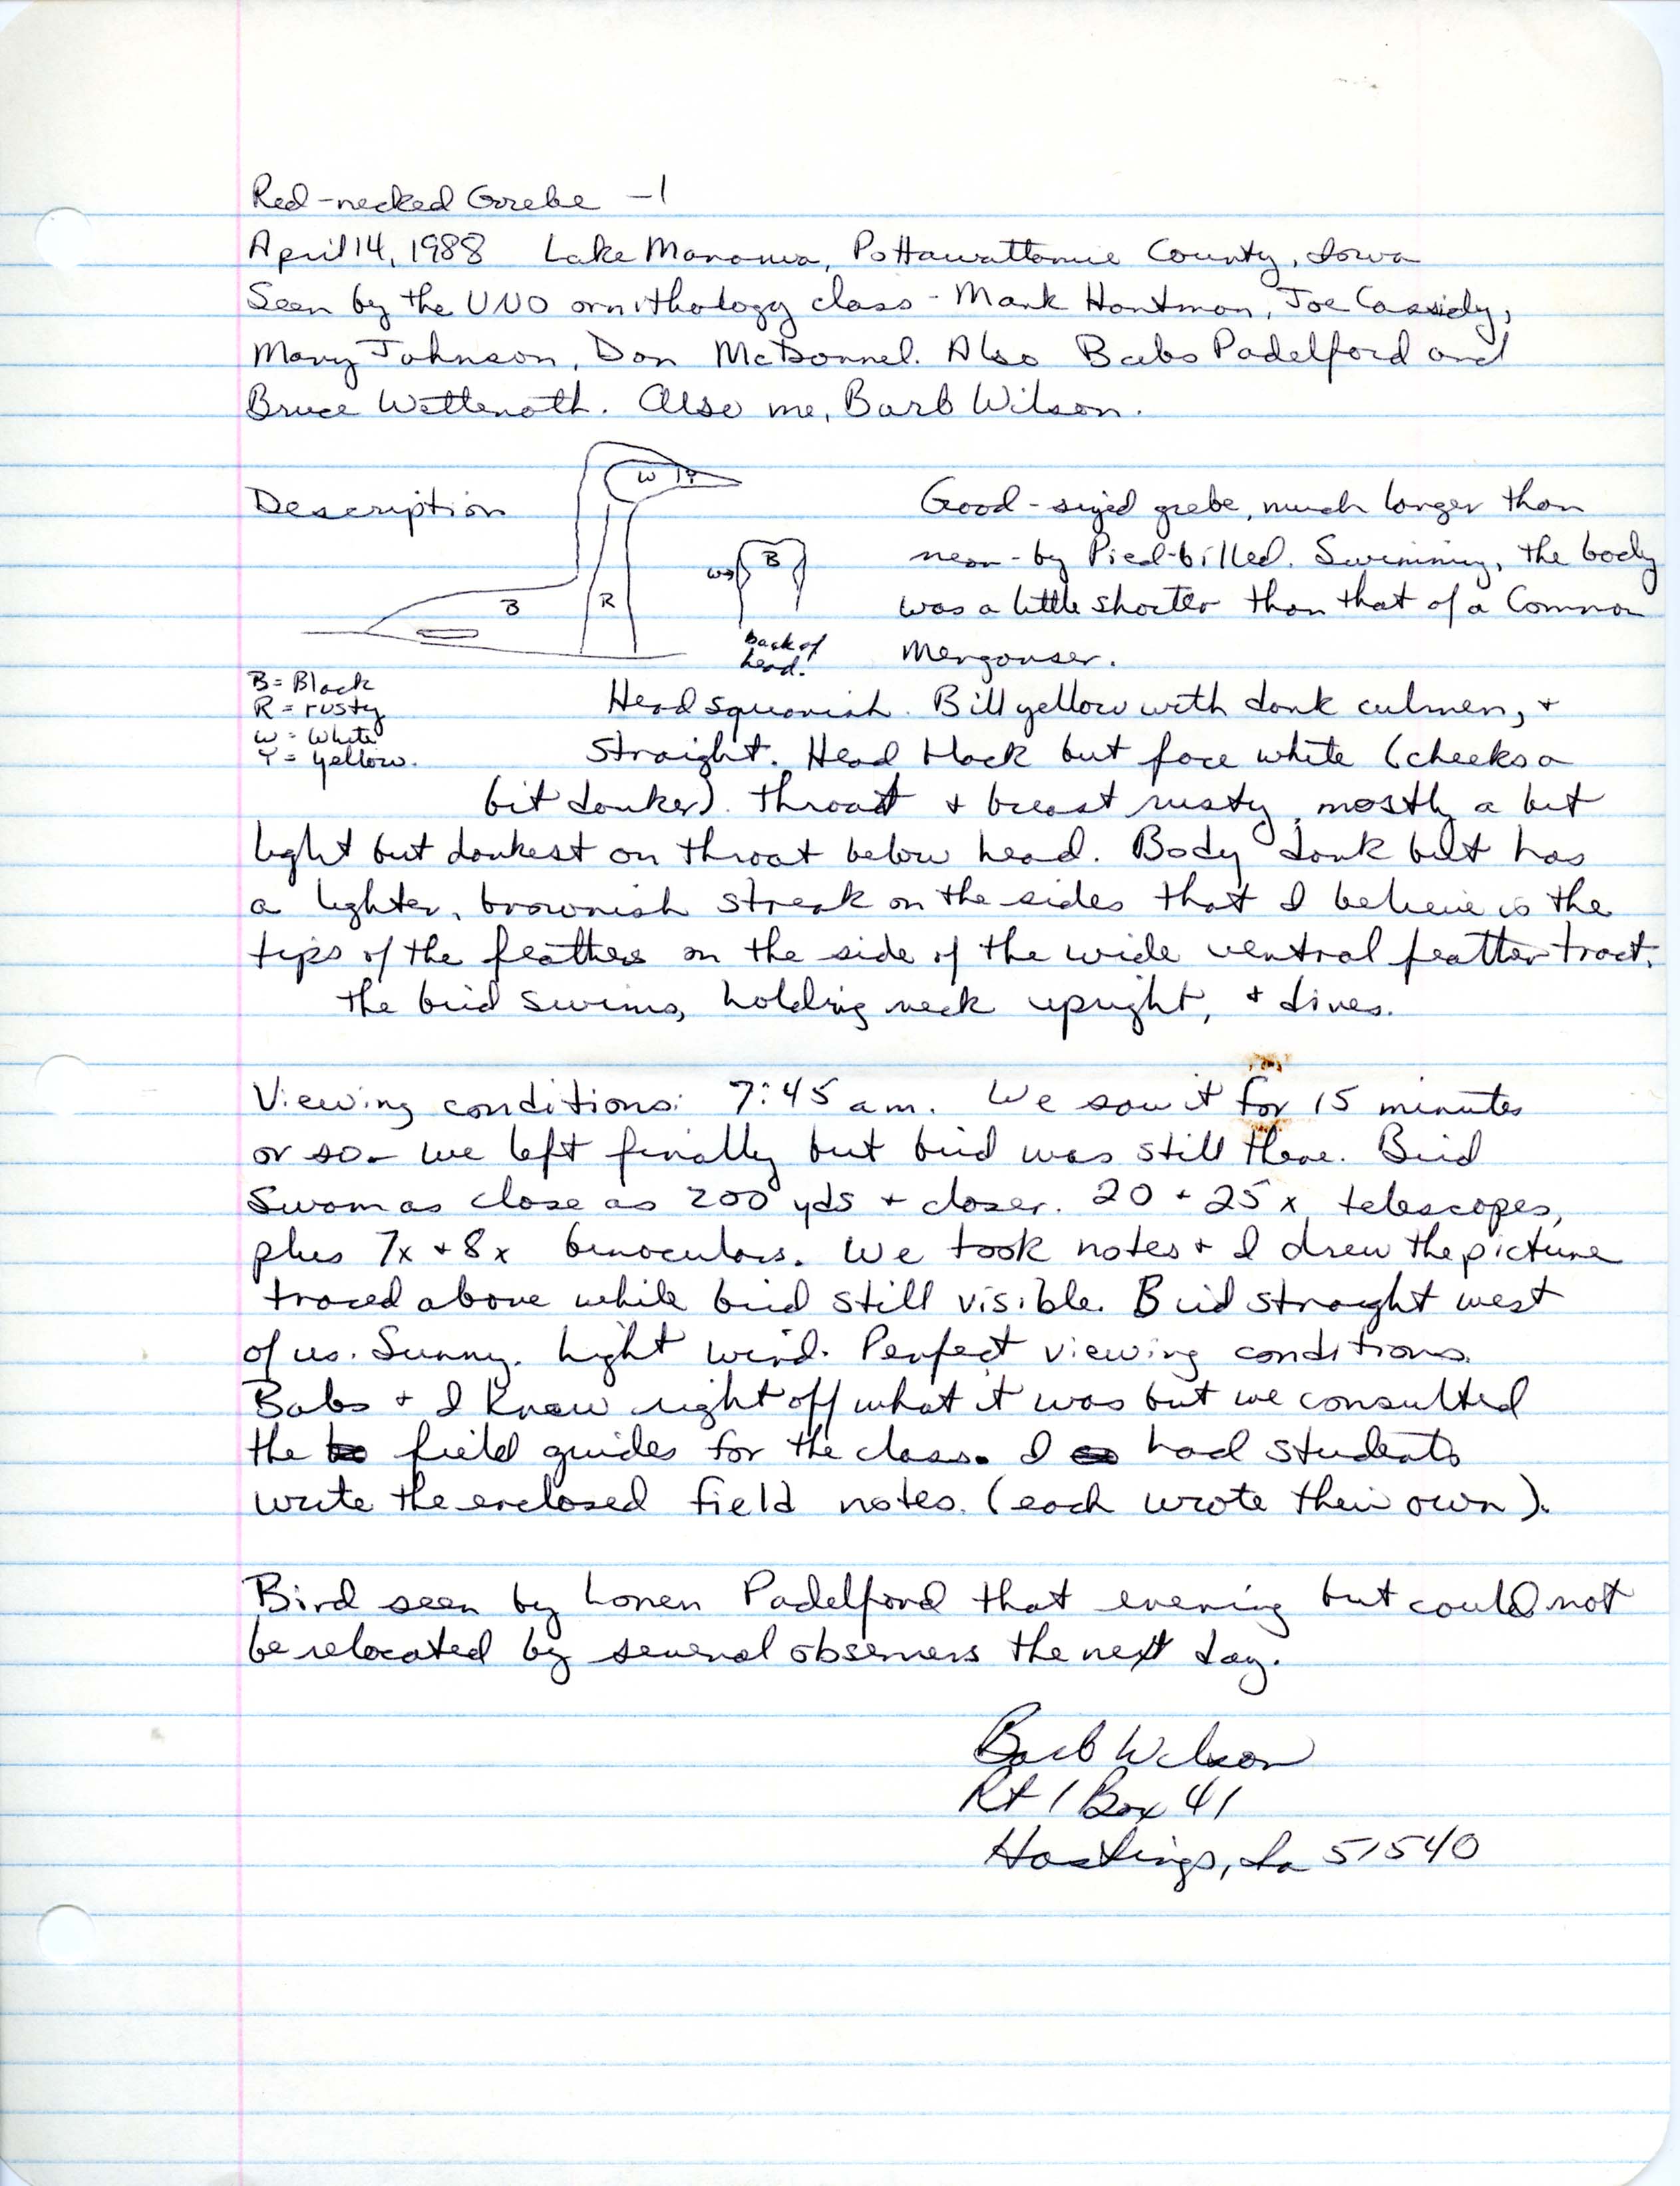 Rare bird documentation form for Red-necked Grebe at Lake Manawa, 1988